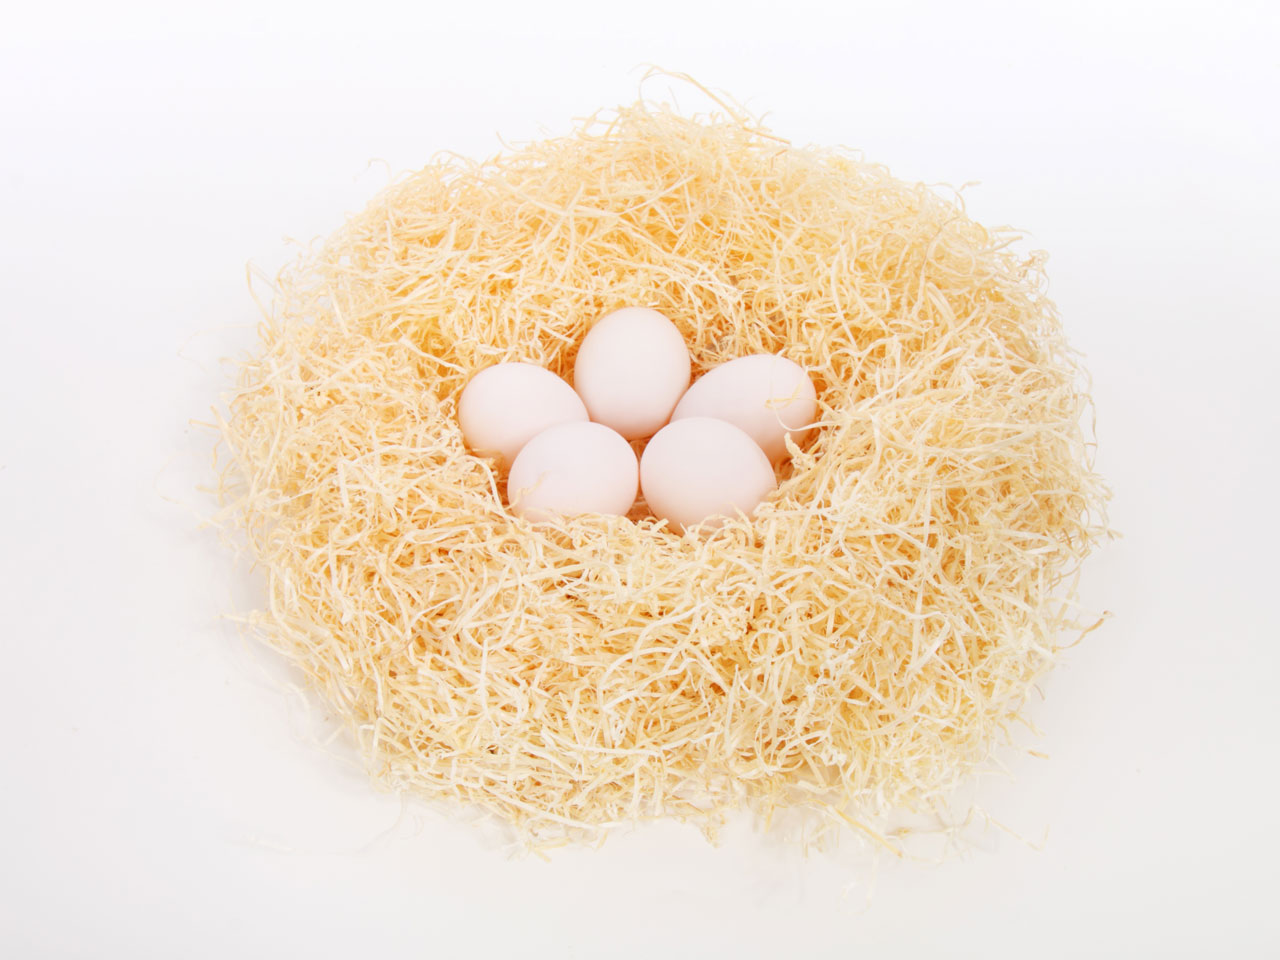 Eieren in nest